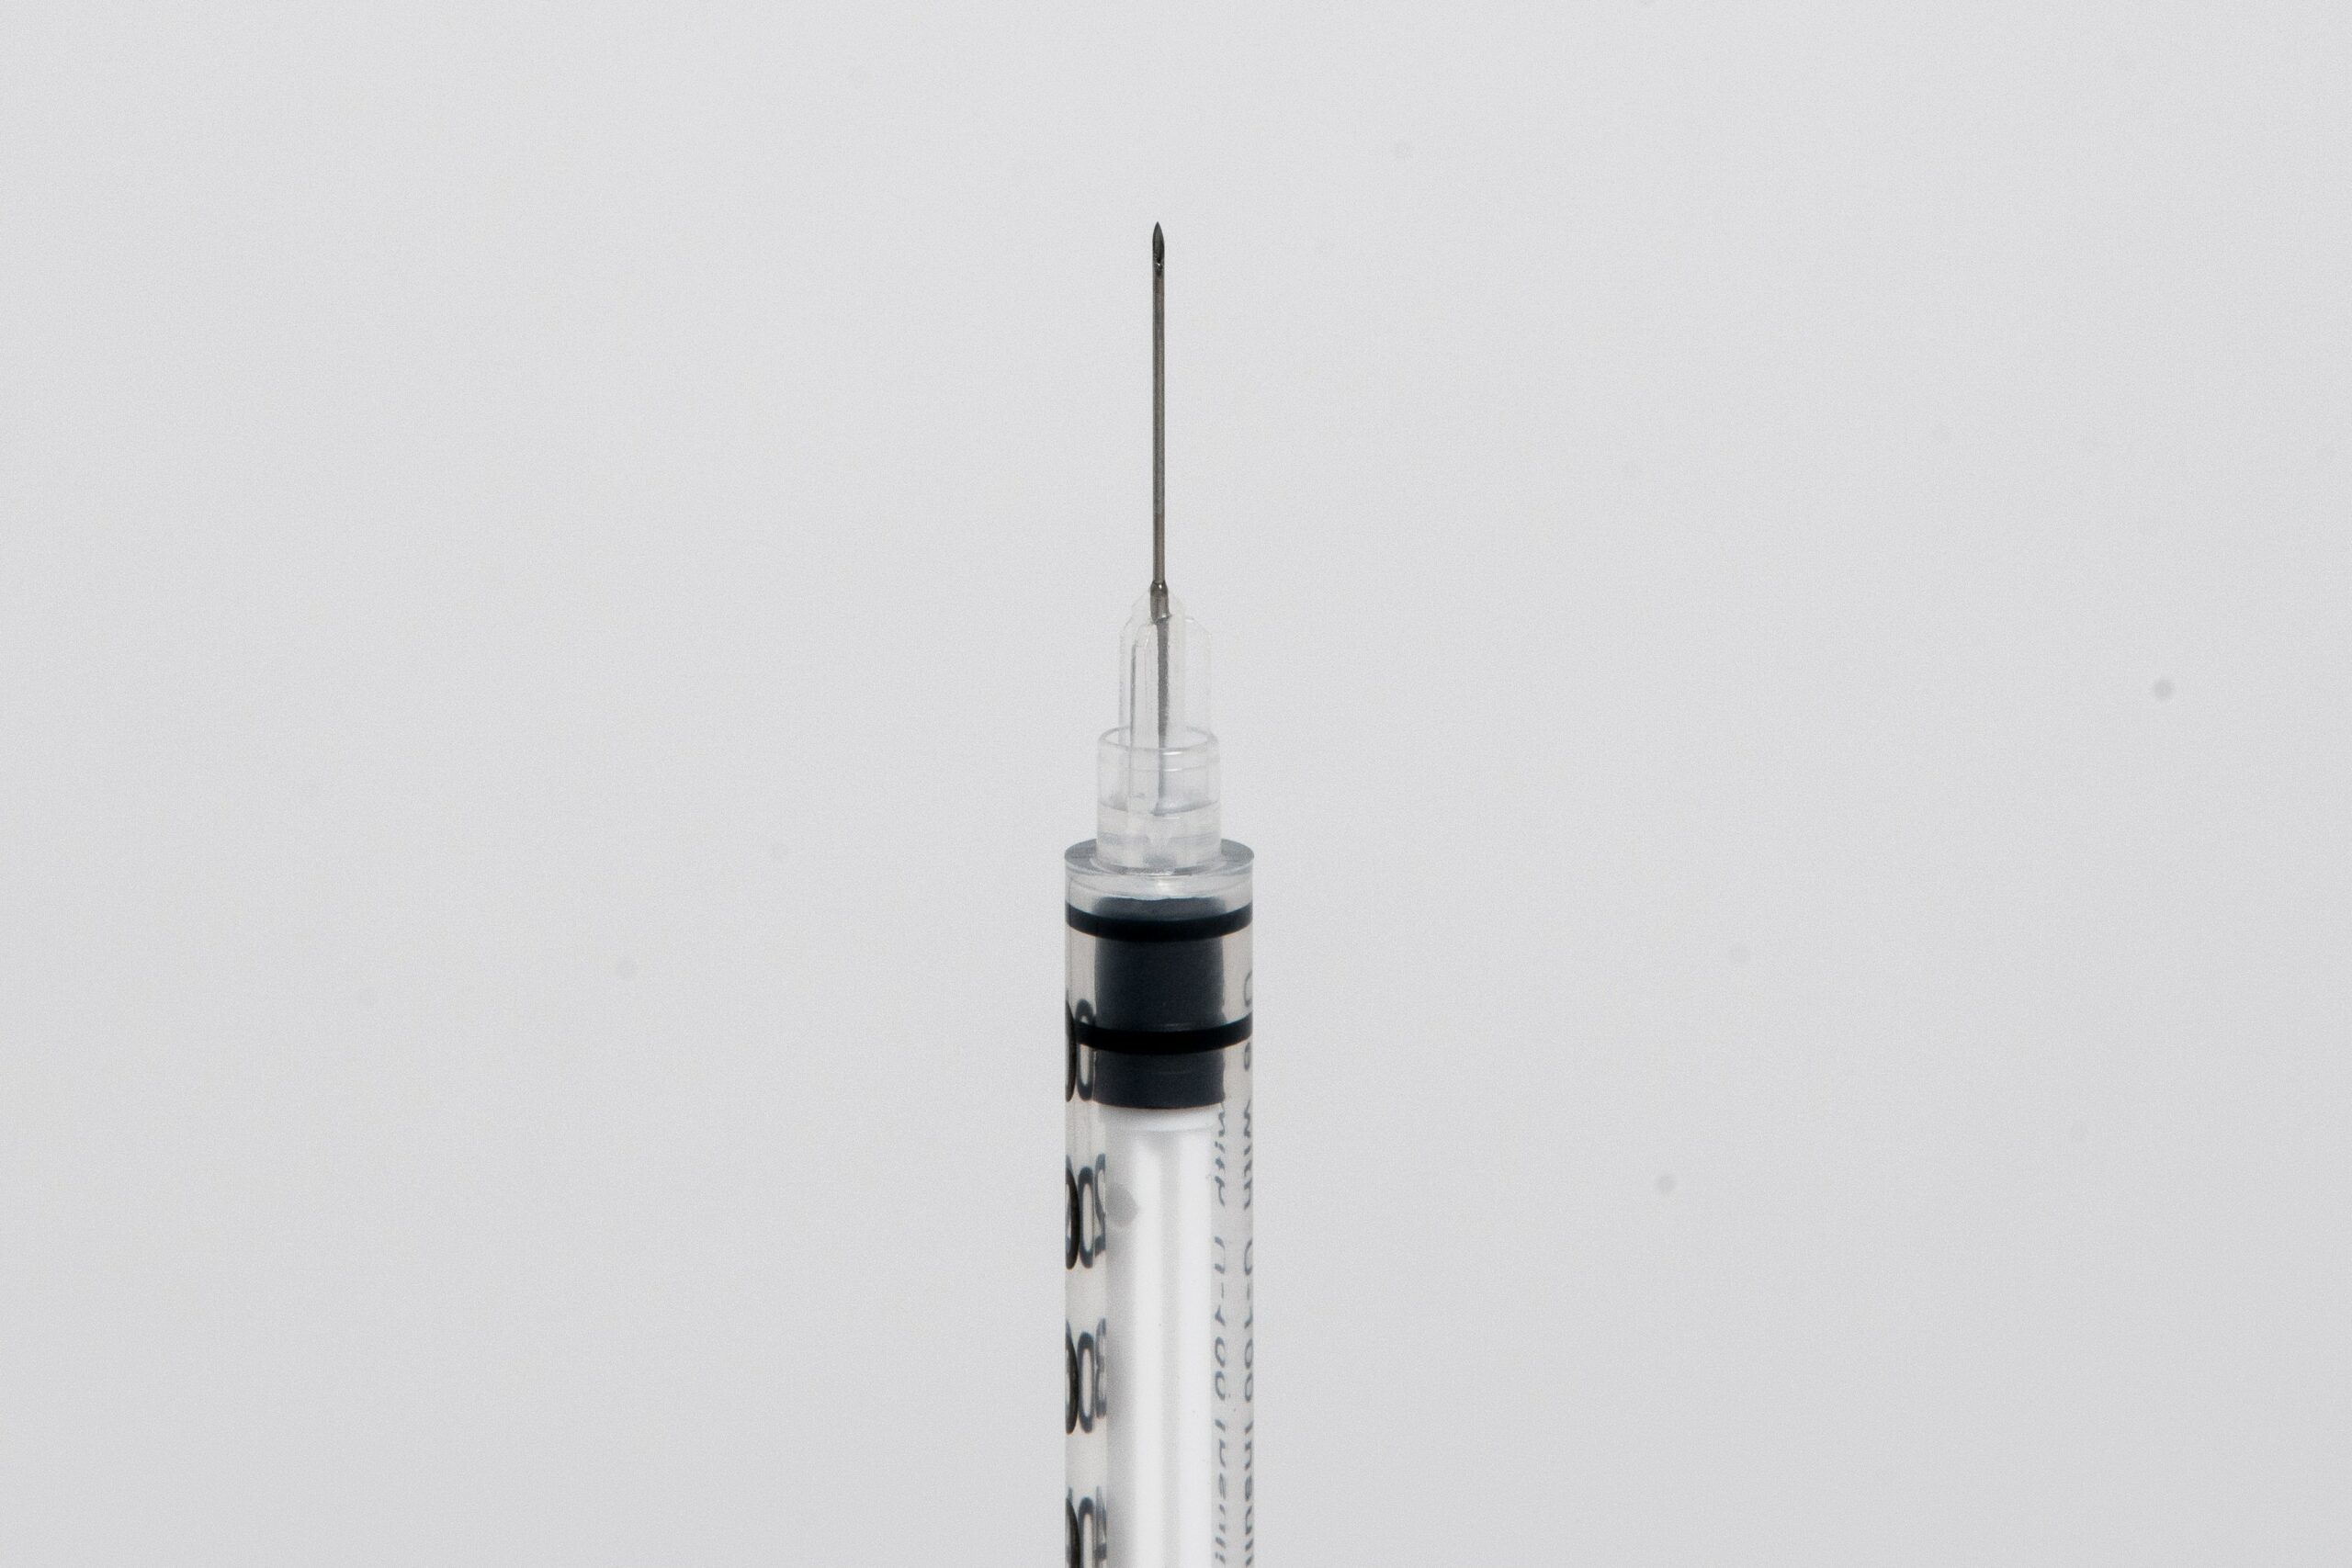 Syringe containing birth control shot